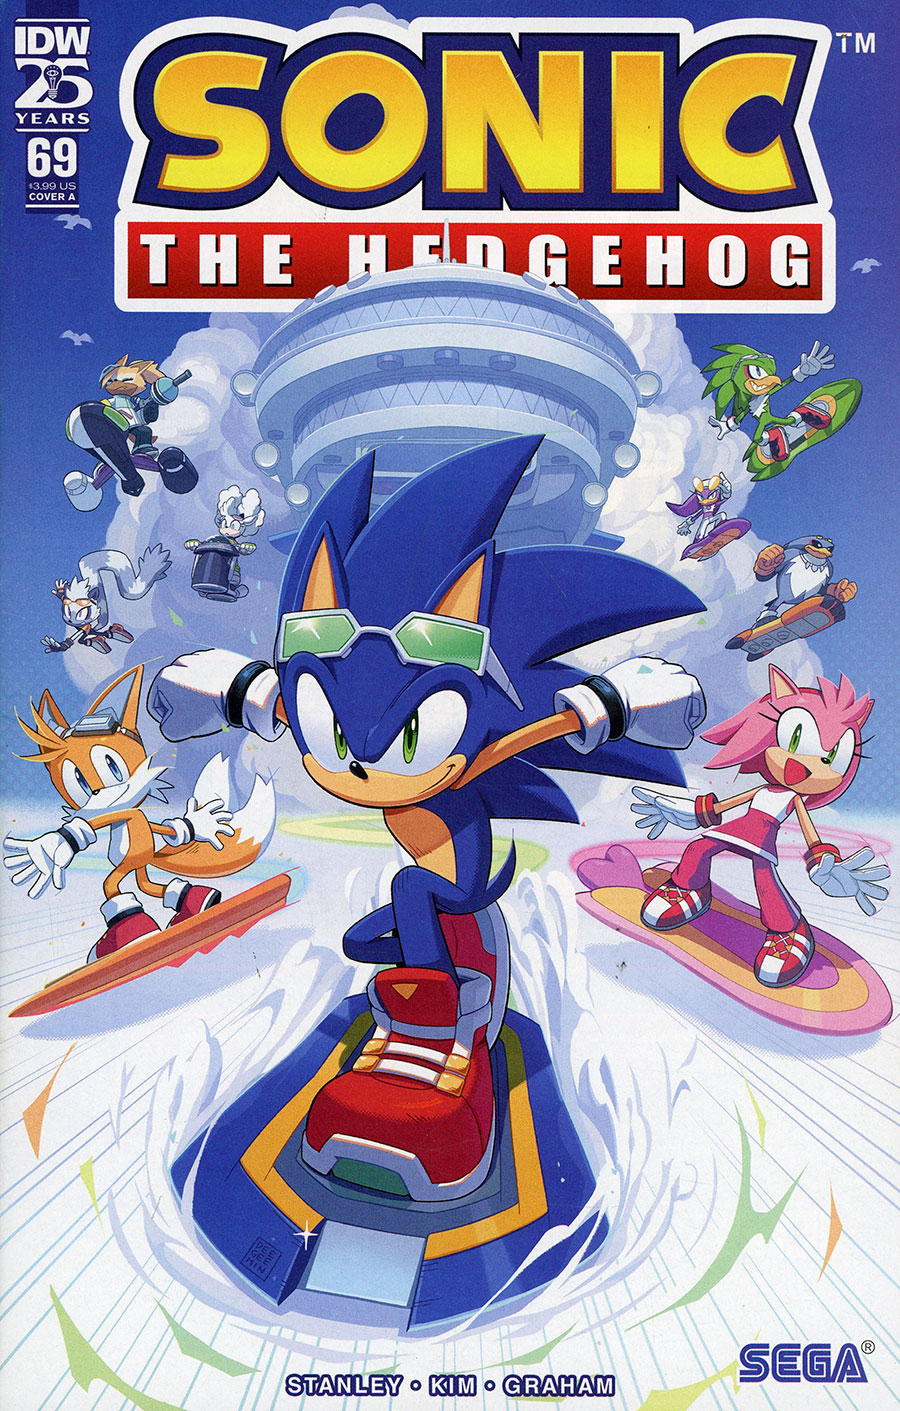 Sonic The Hedgehog Vol 3 #69 Cover A Regular Min Ho Kim Cover